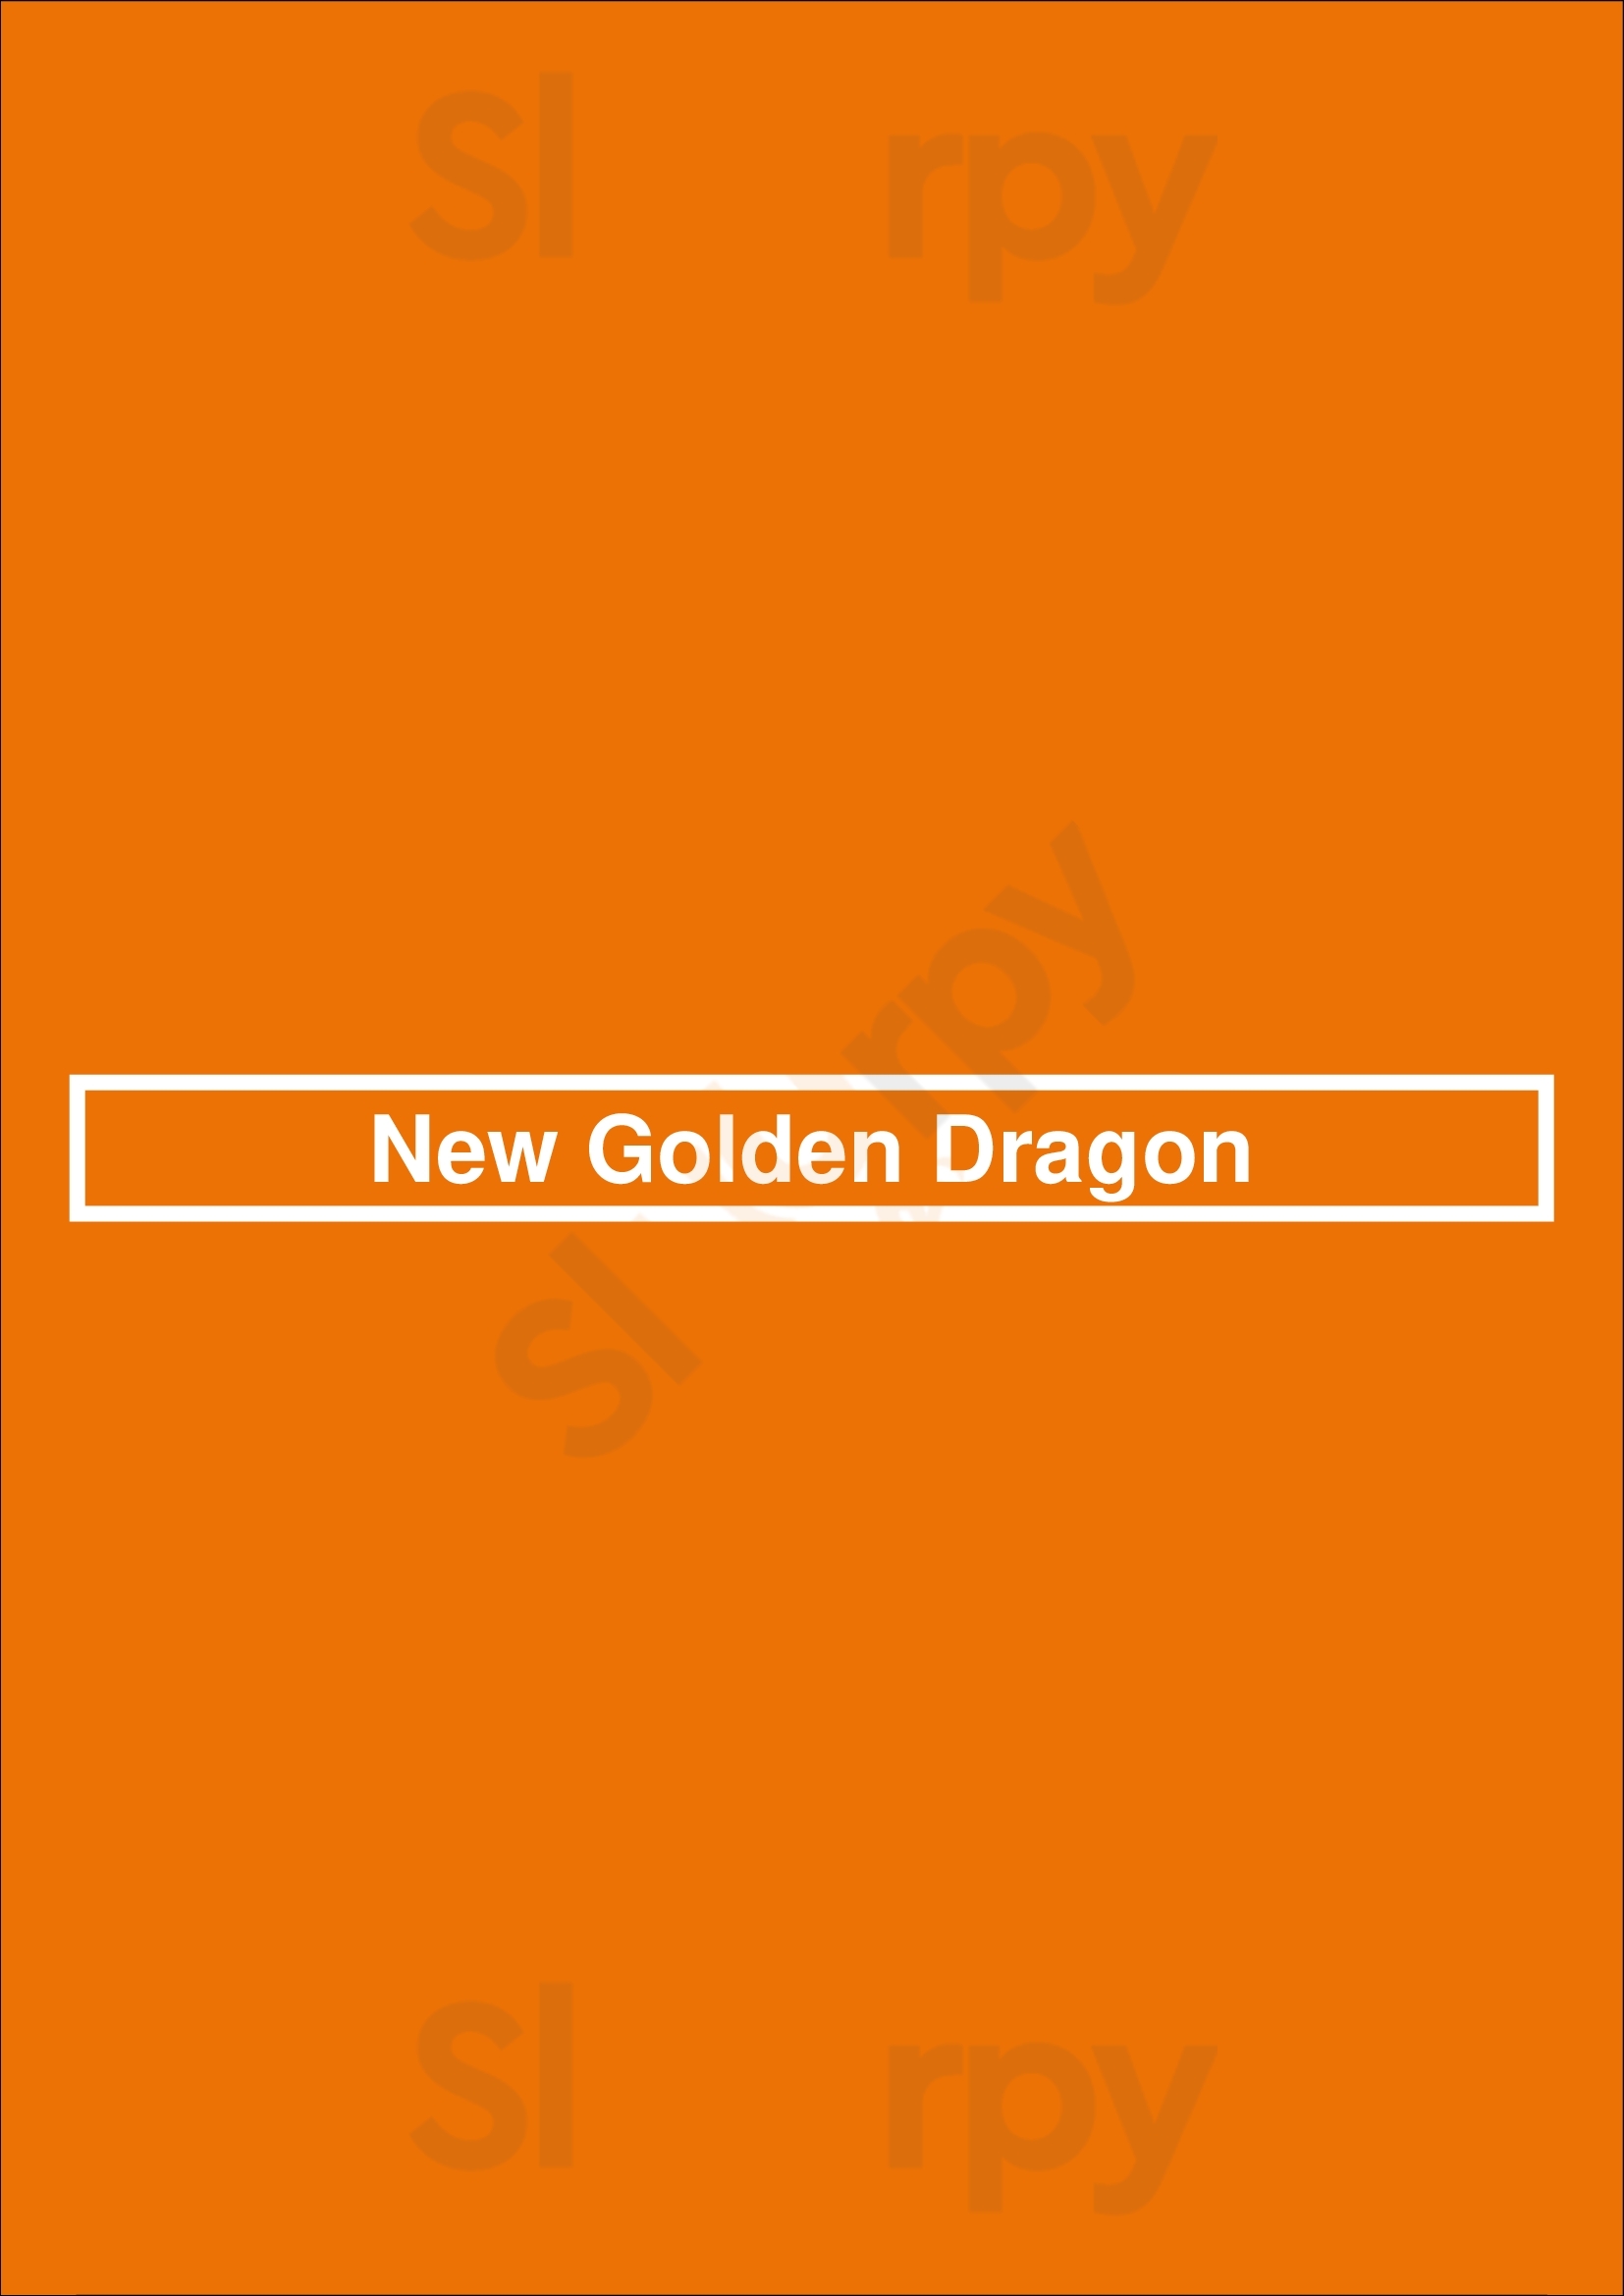 New Golden Dragon Leicester Menu - 1